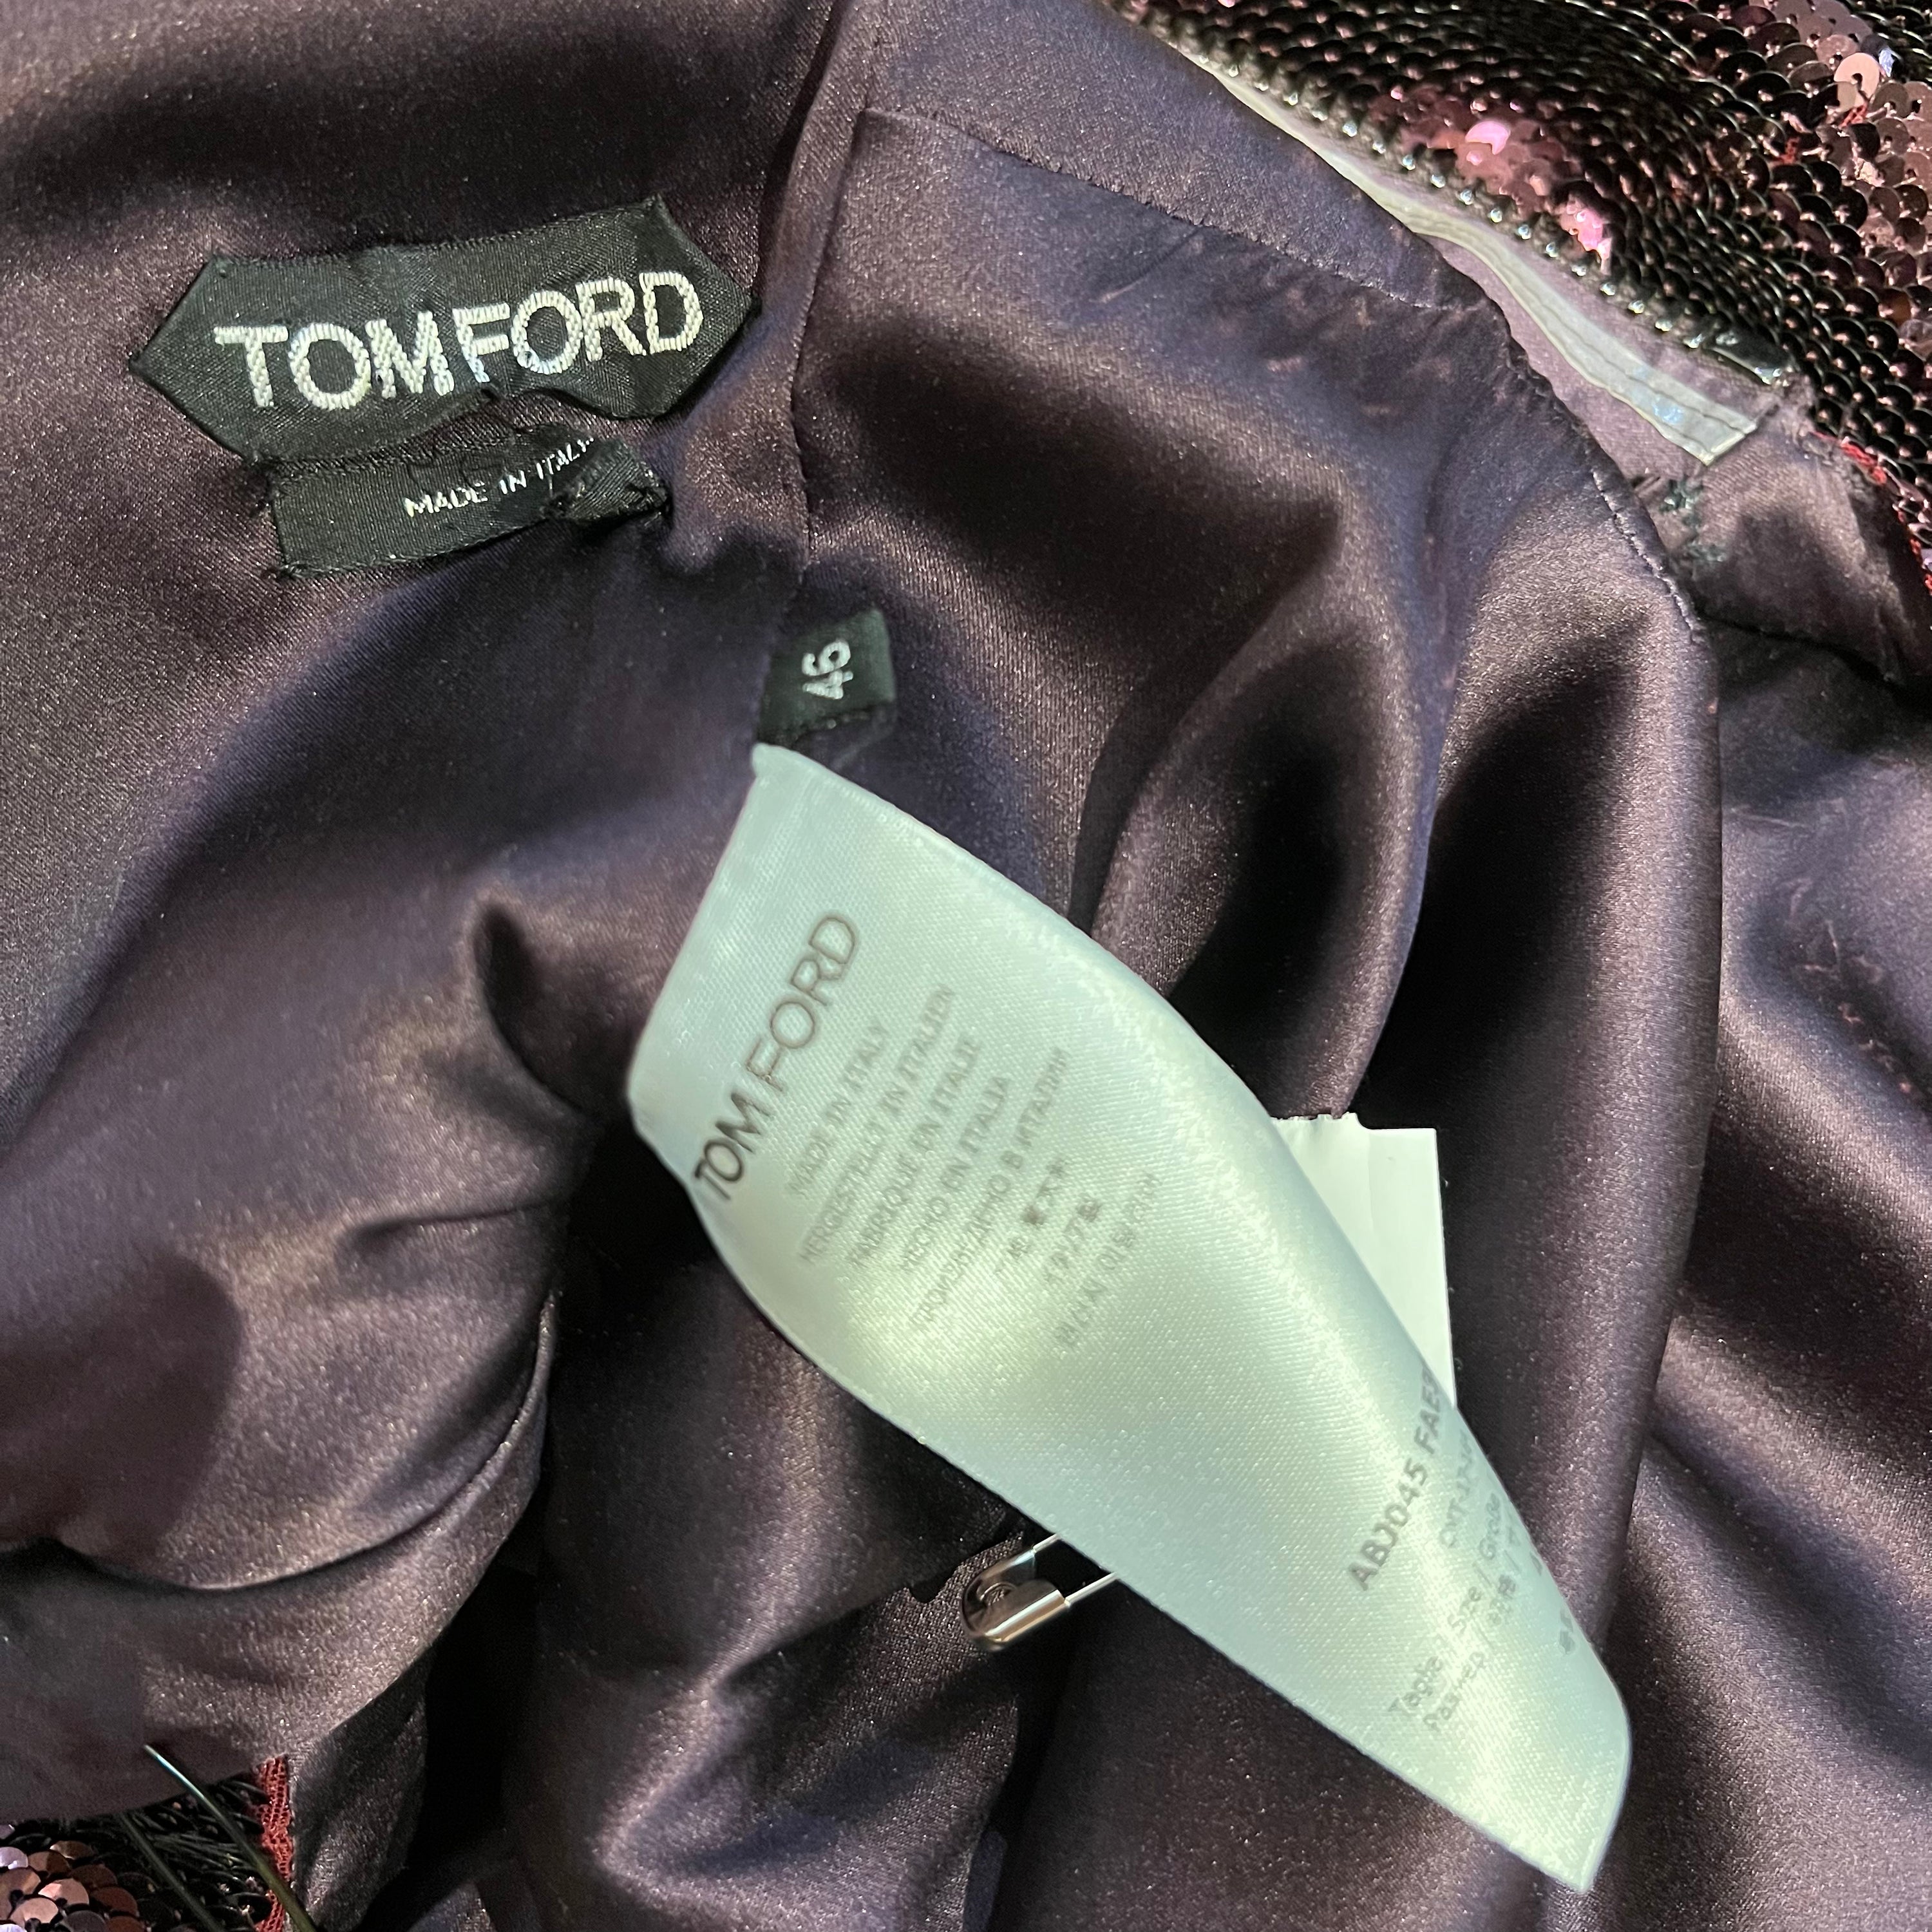 Printed Silk Robe in Multicoloured - Tom Ford